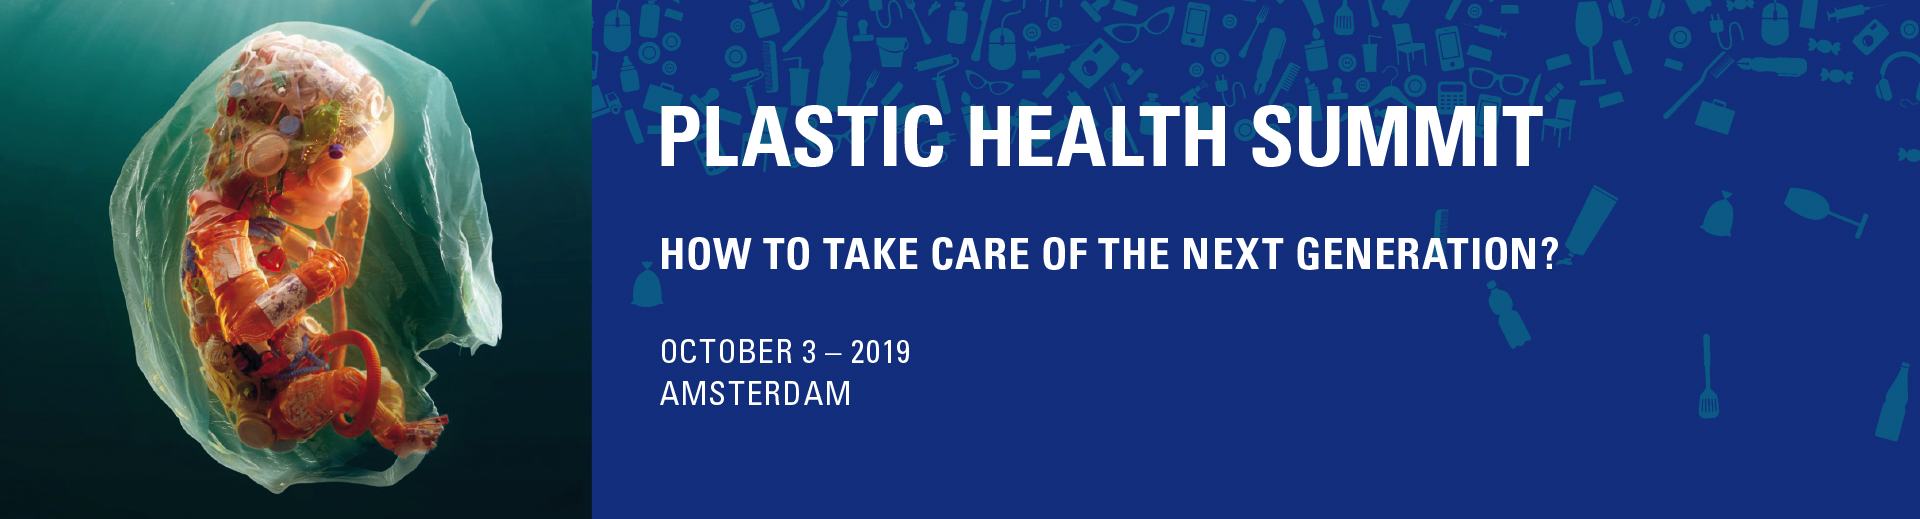 Plastic Health Summit 2019 - Plastic Health Coalition